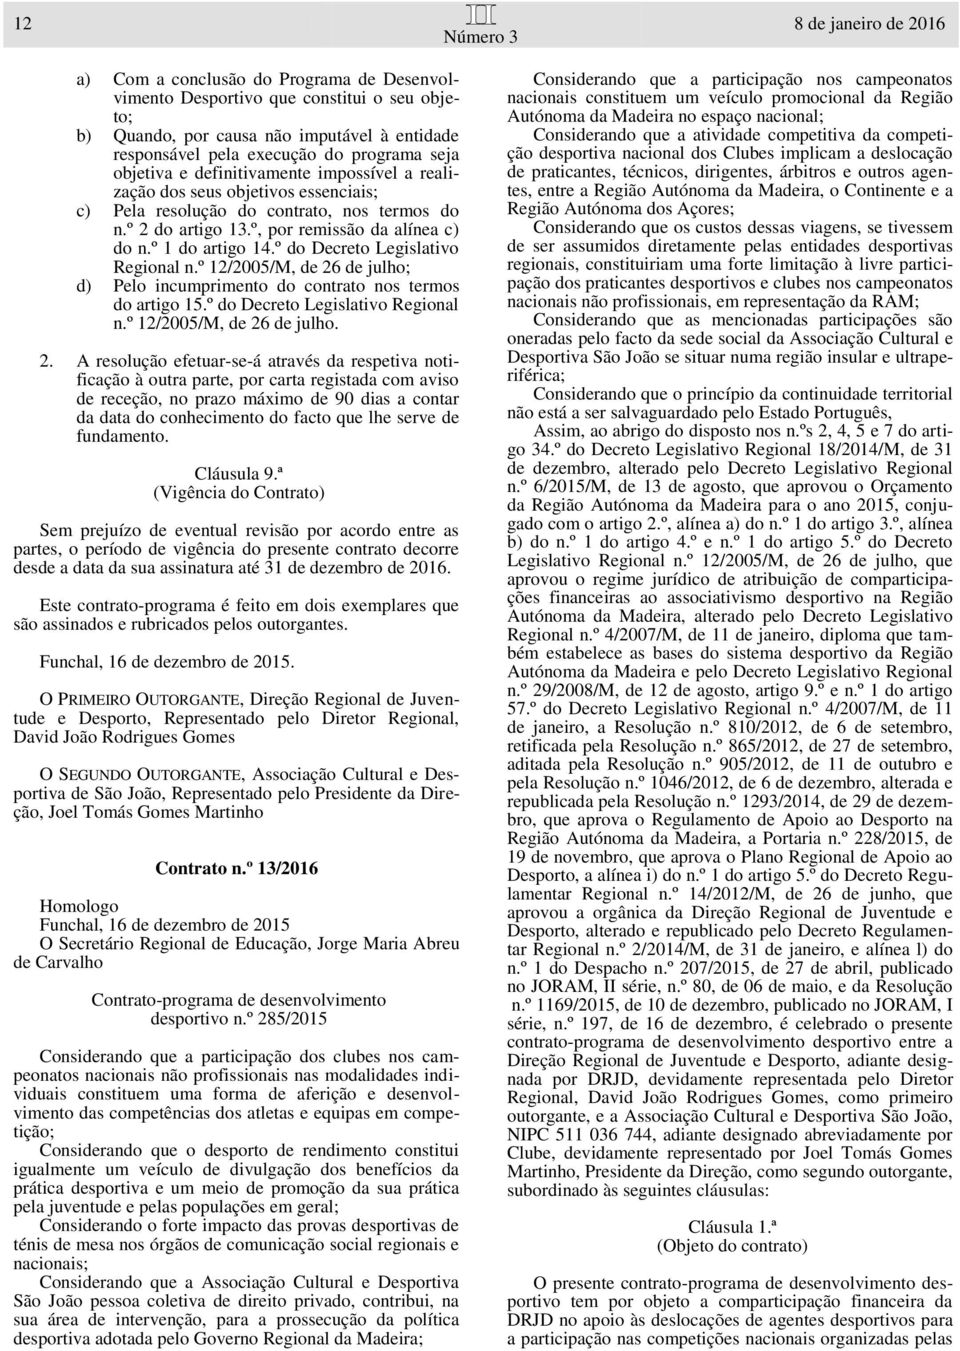 º do Decreto Legislativo Regional n.º 12/2005/M, de 26